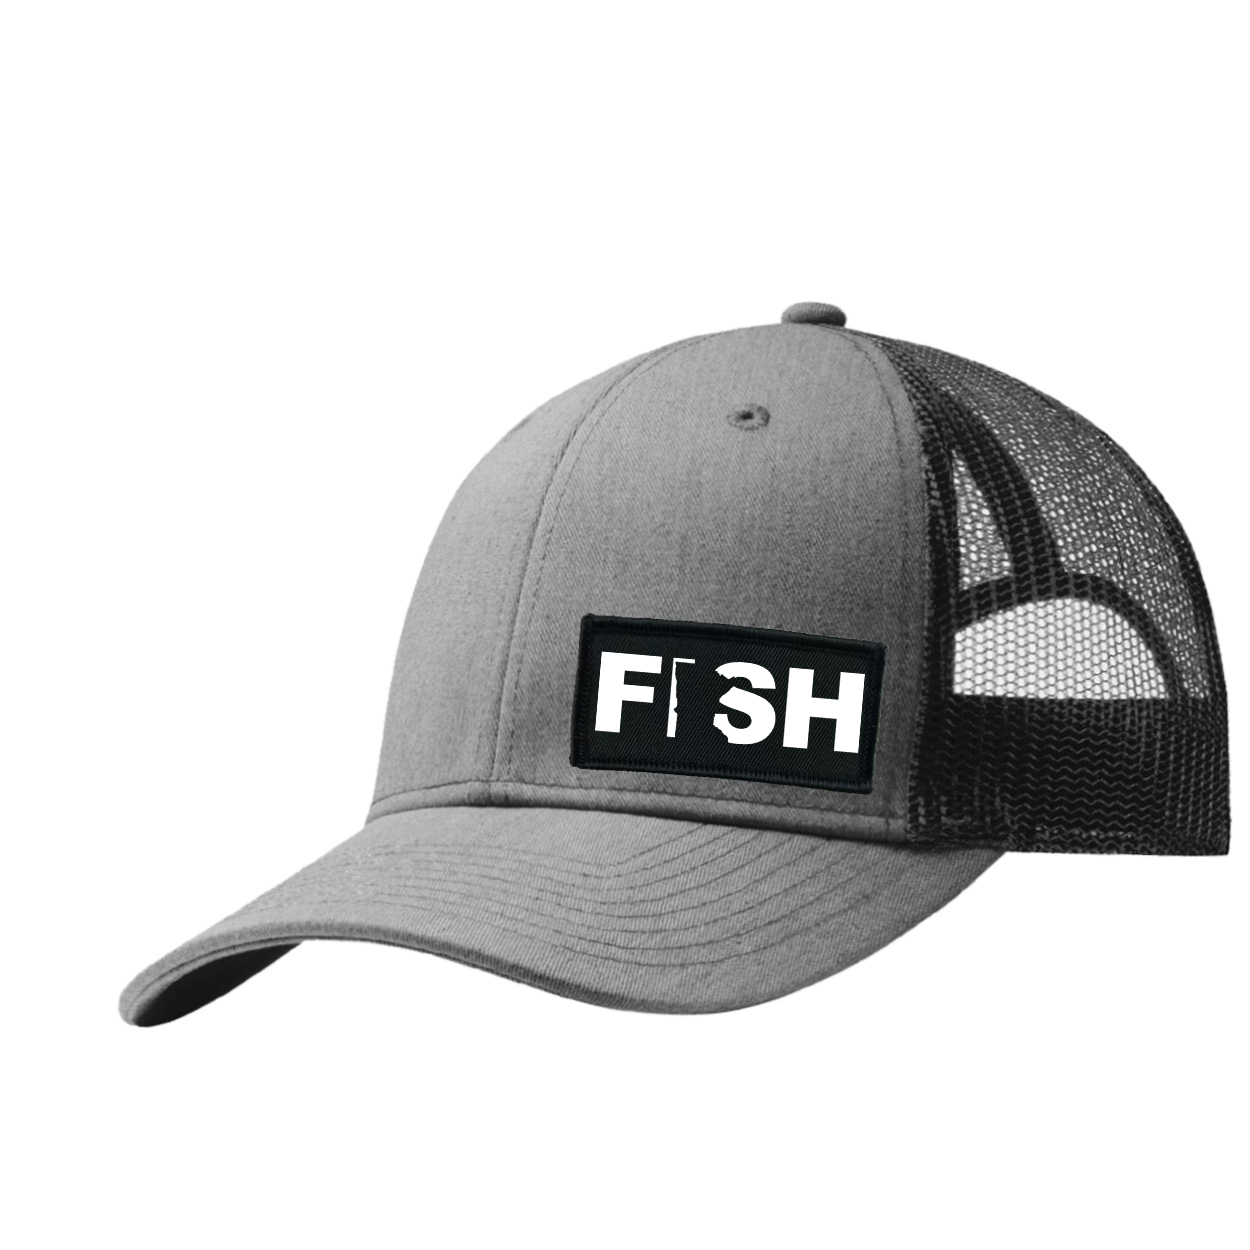 Fish Minnesota Night Out Woven Patch Snapback Trucker Hat Heather Gray/Black (White Logo)